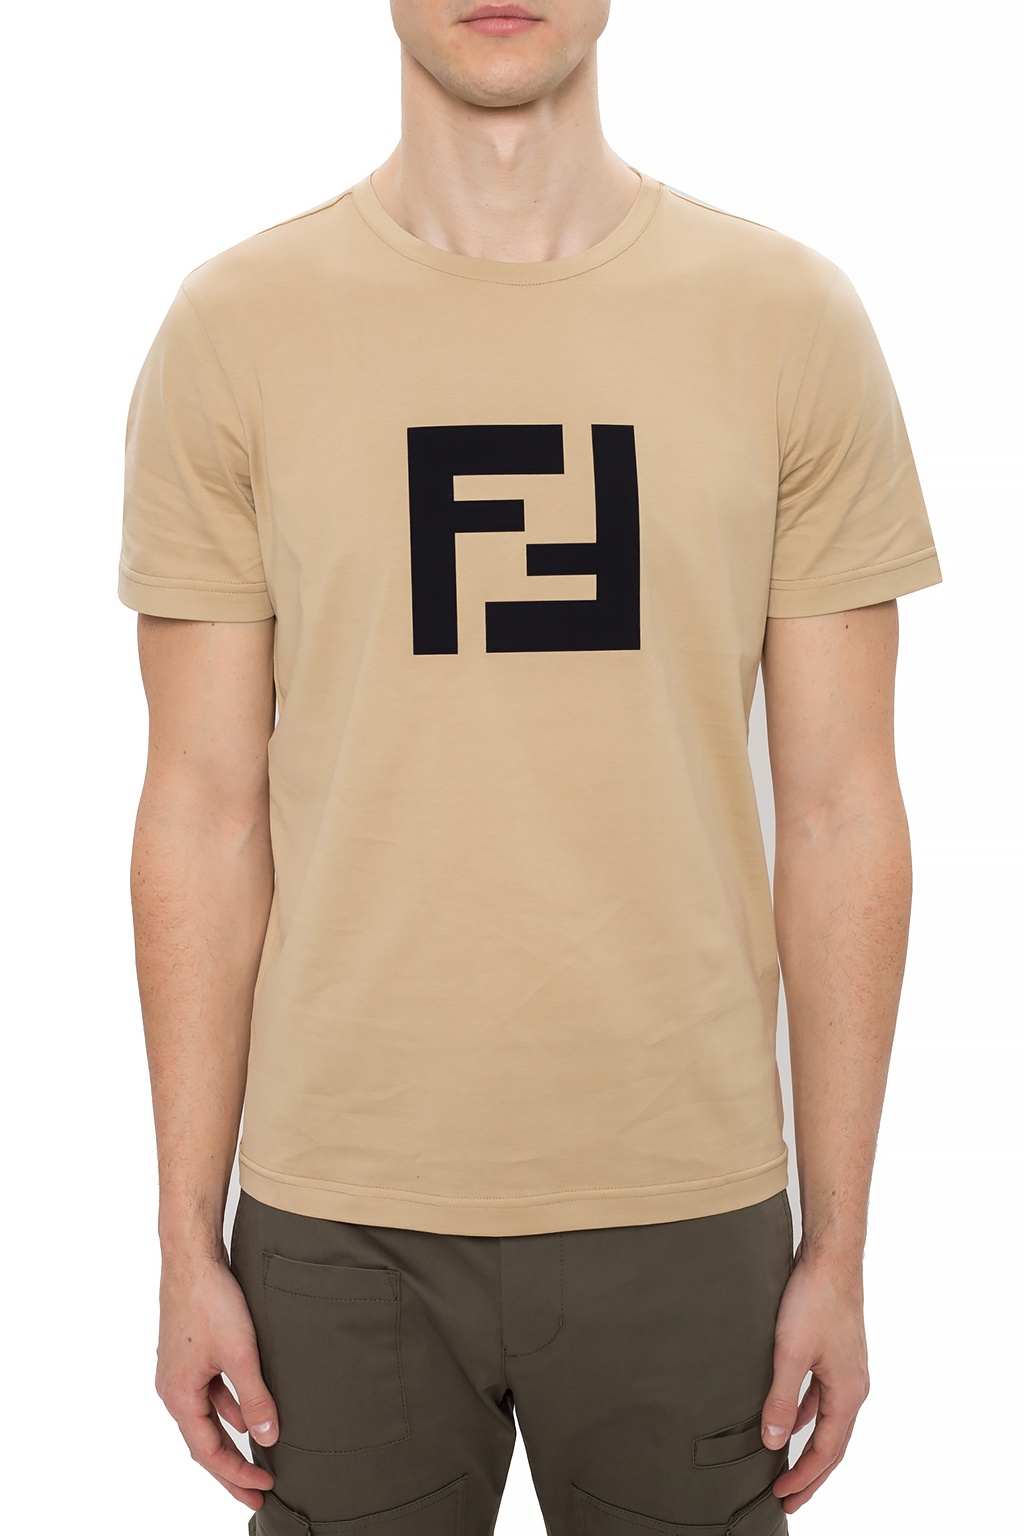 Fendi T-shirt with logo | Men's Clothing | Vitkac